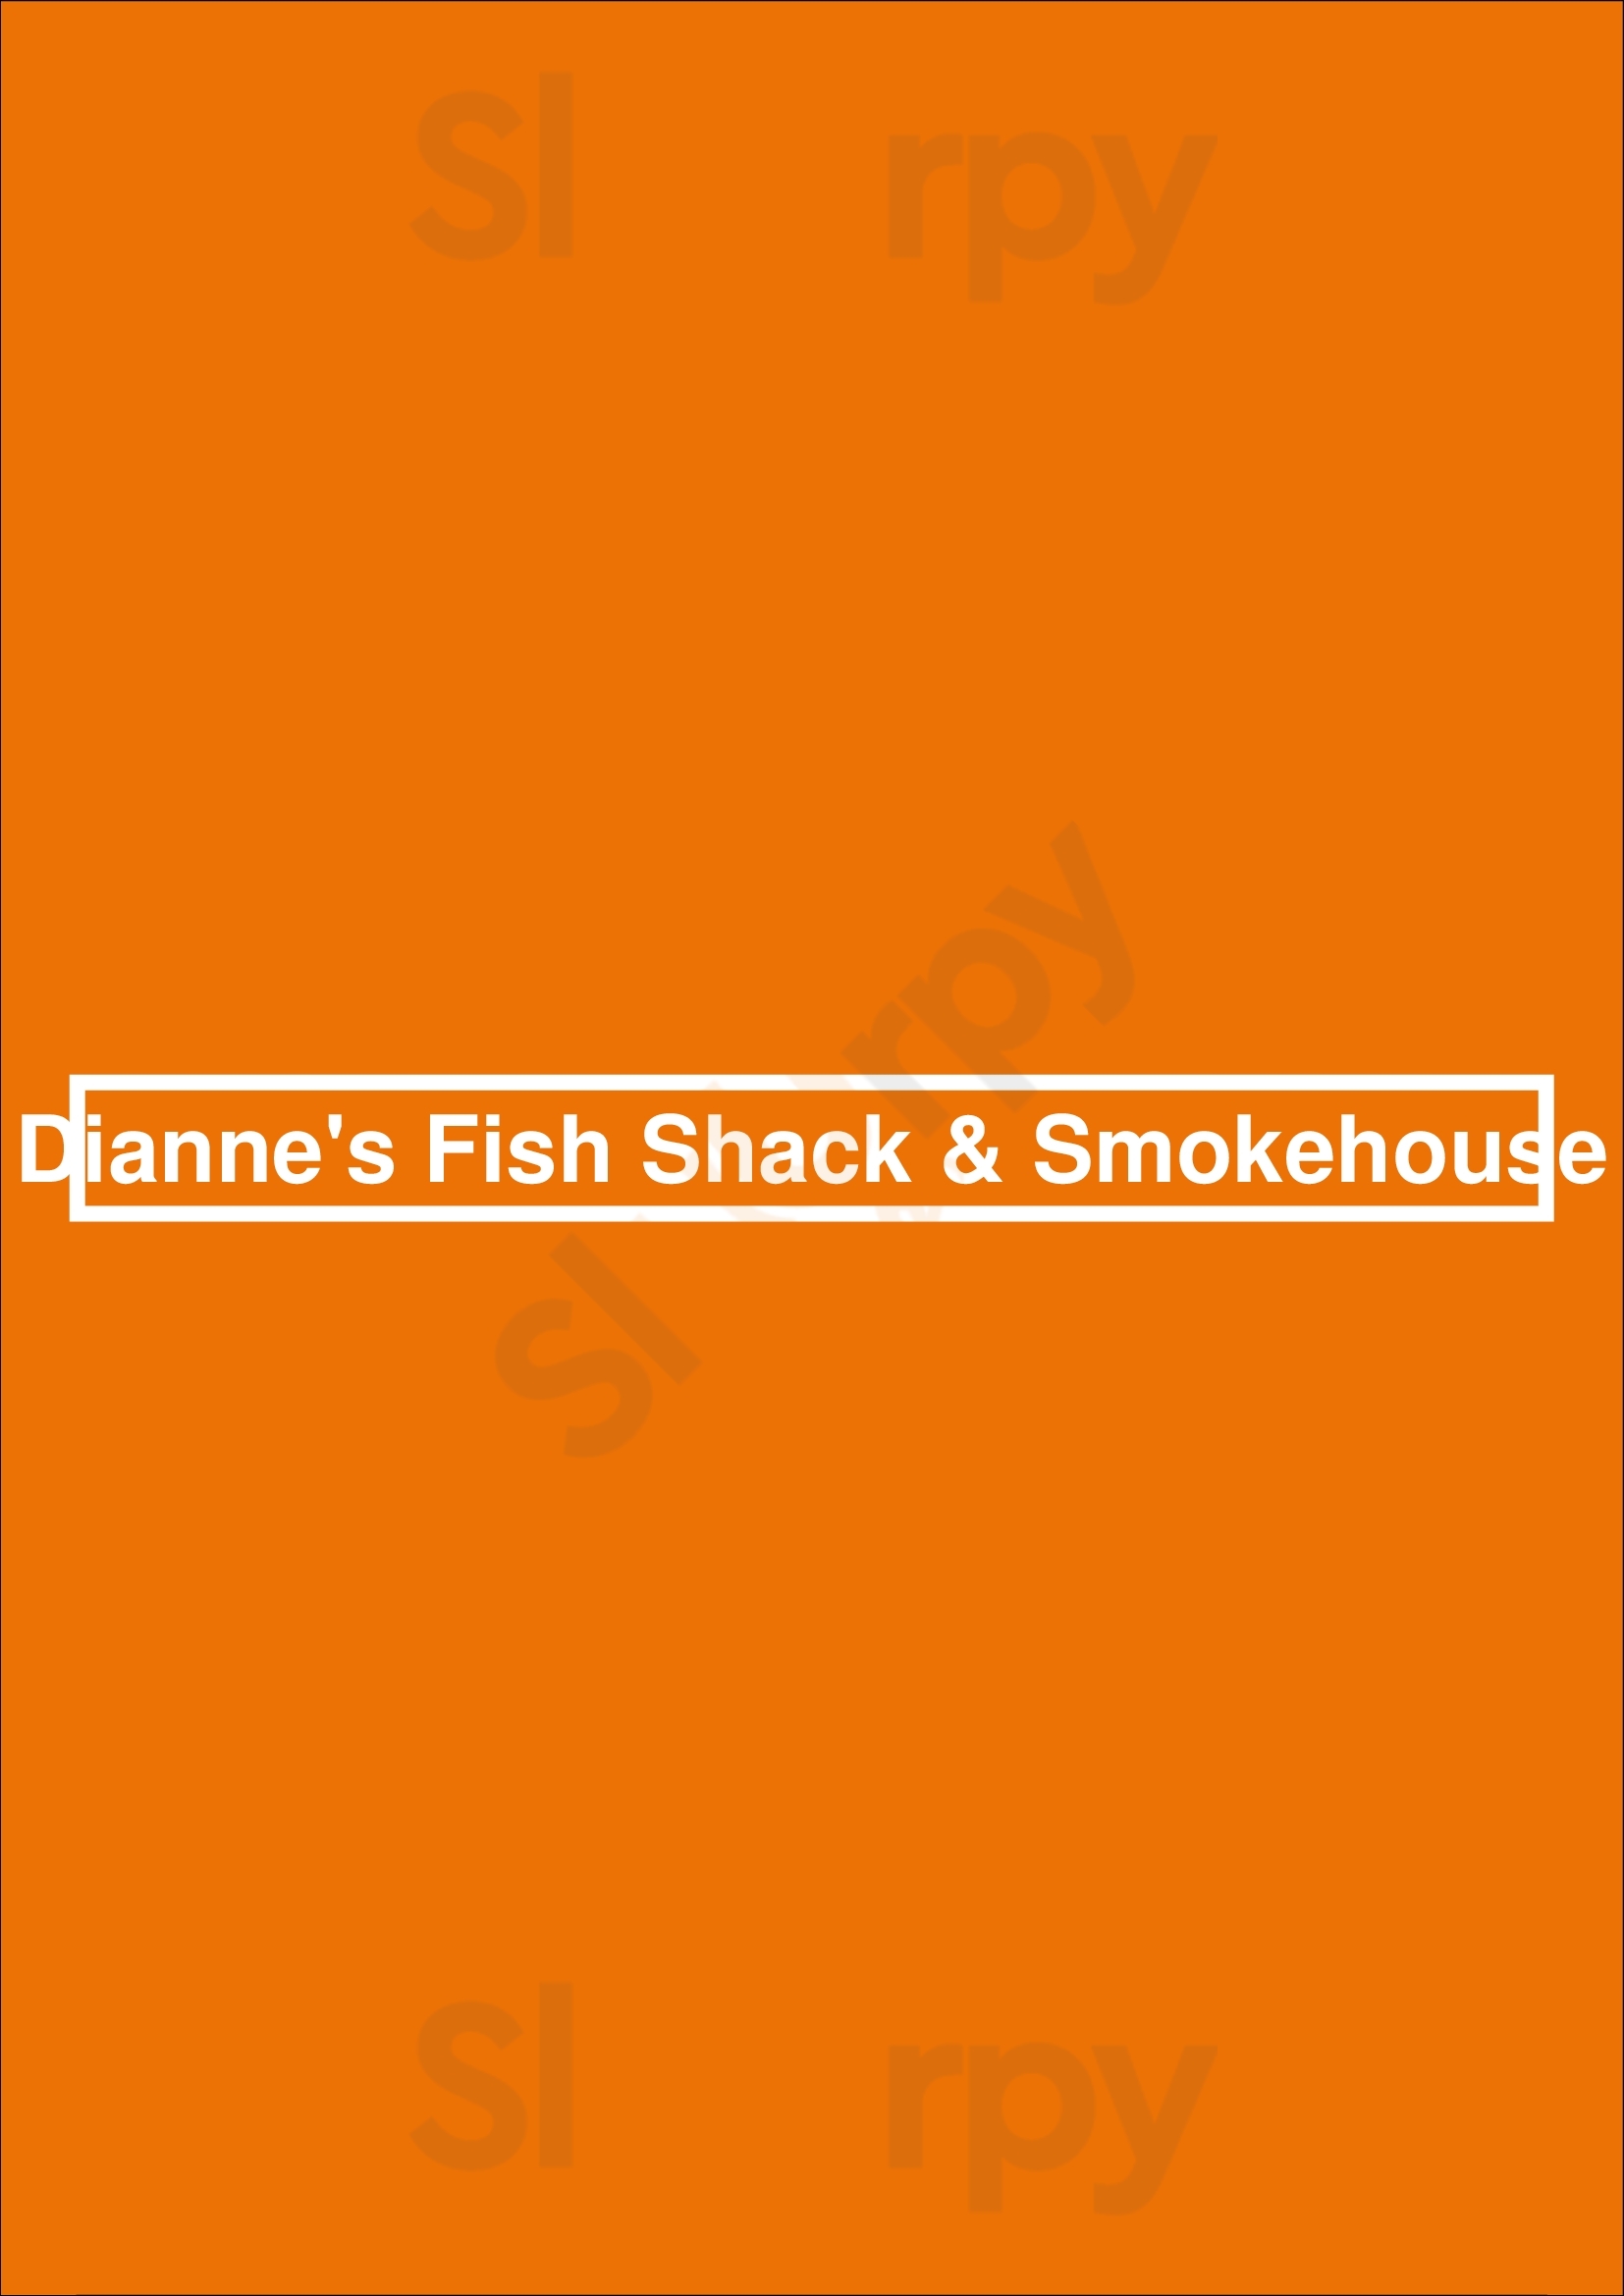 Dianne's Fish Shack & Smokehouse Kingston Menu - 1